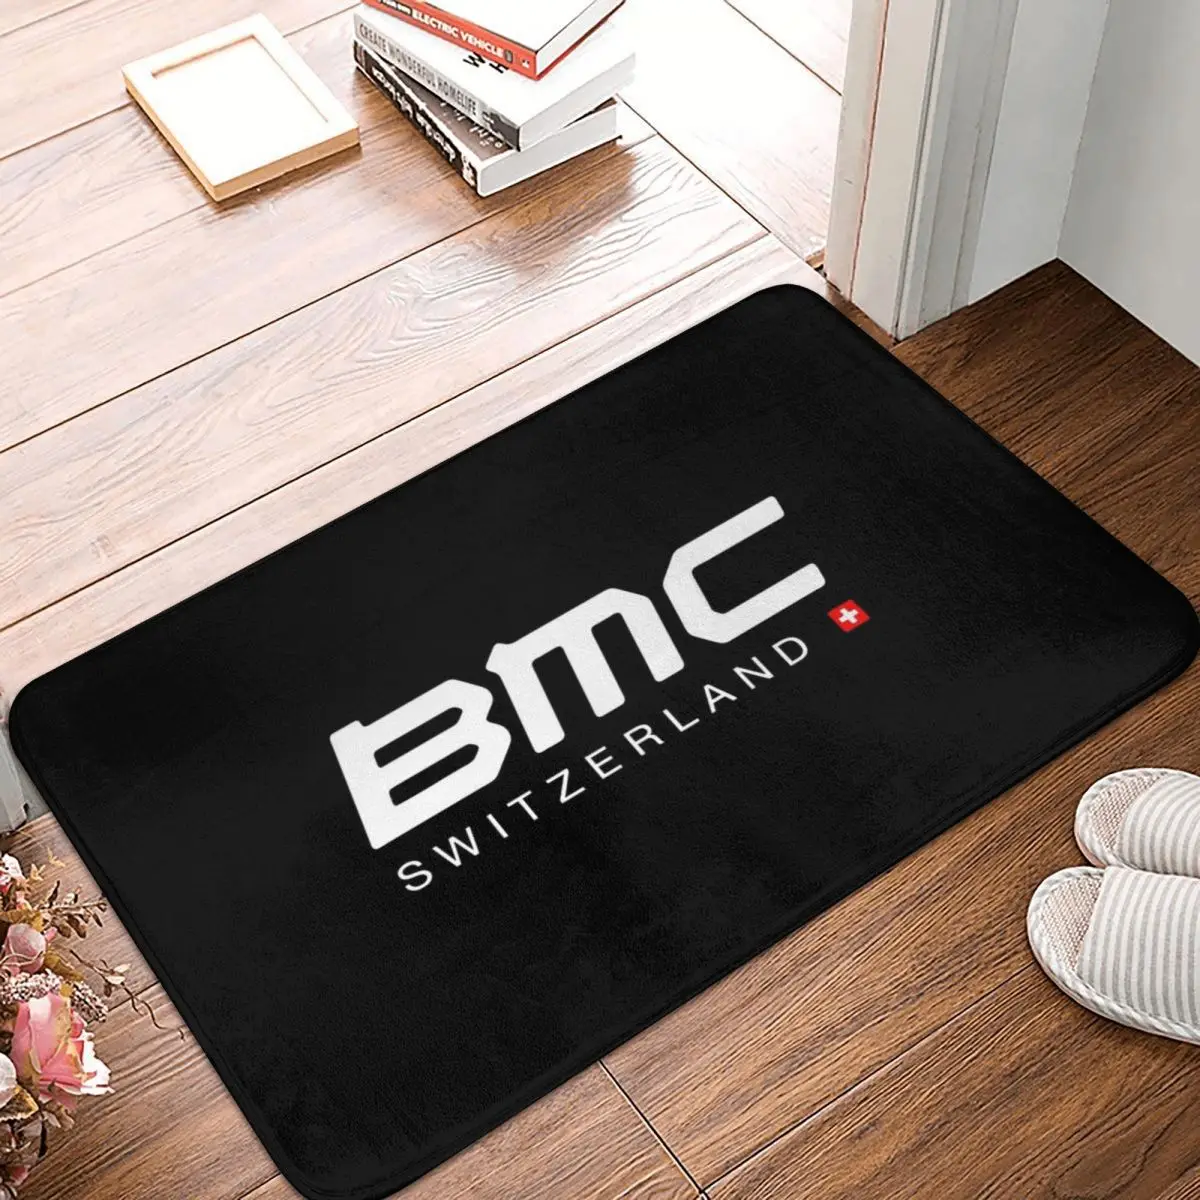 

BEST TO BUY BMC Bikes Doormat Carpet Mat Rug Polyester PVC Anti-slip Floor Decor Bath Bathroom Kitchen Bedroom 40*60